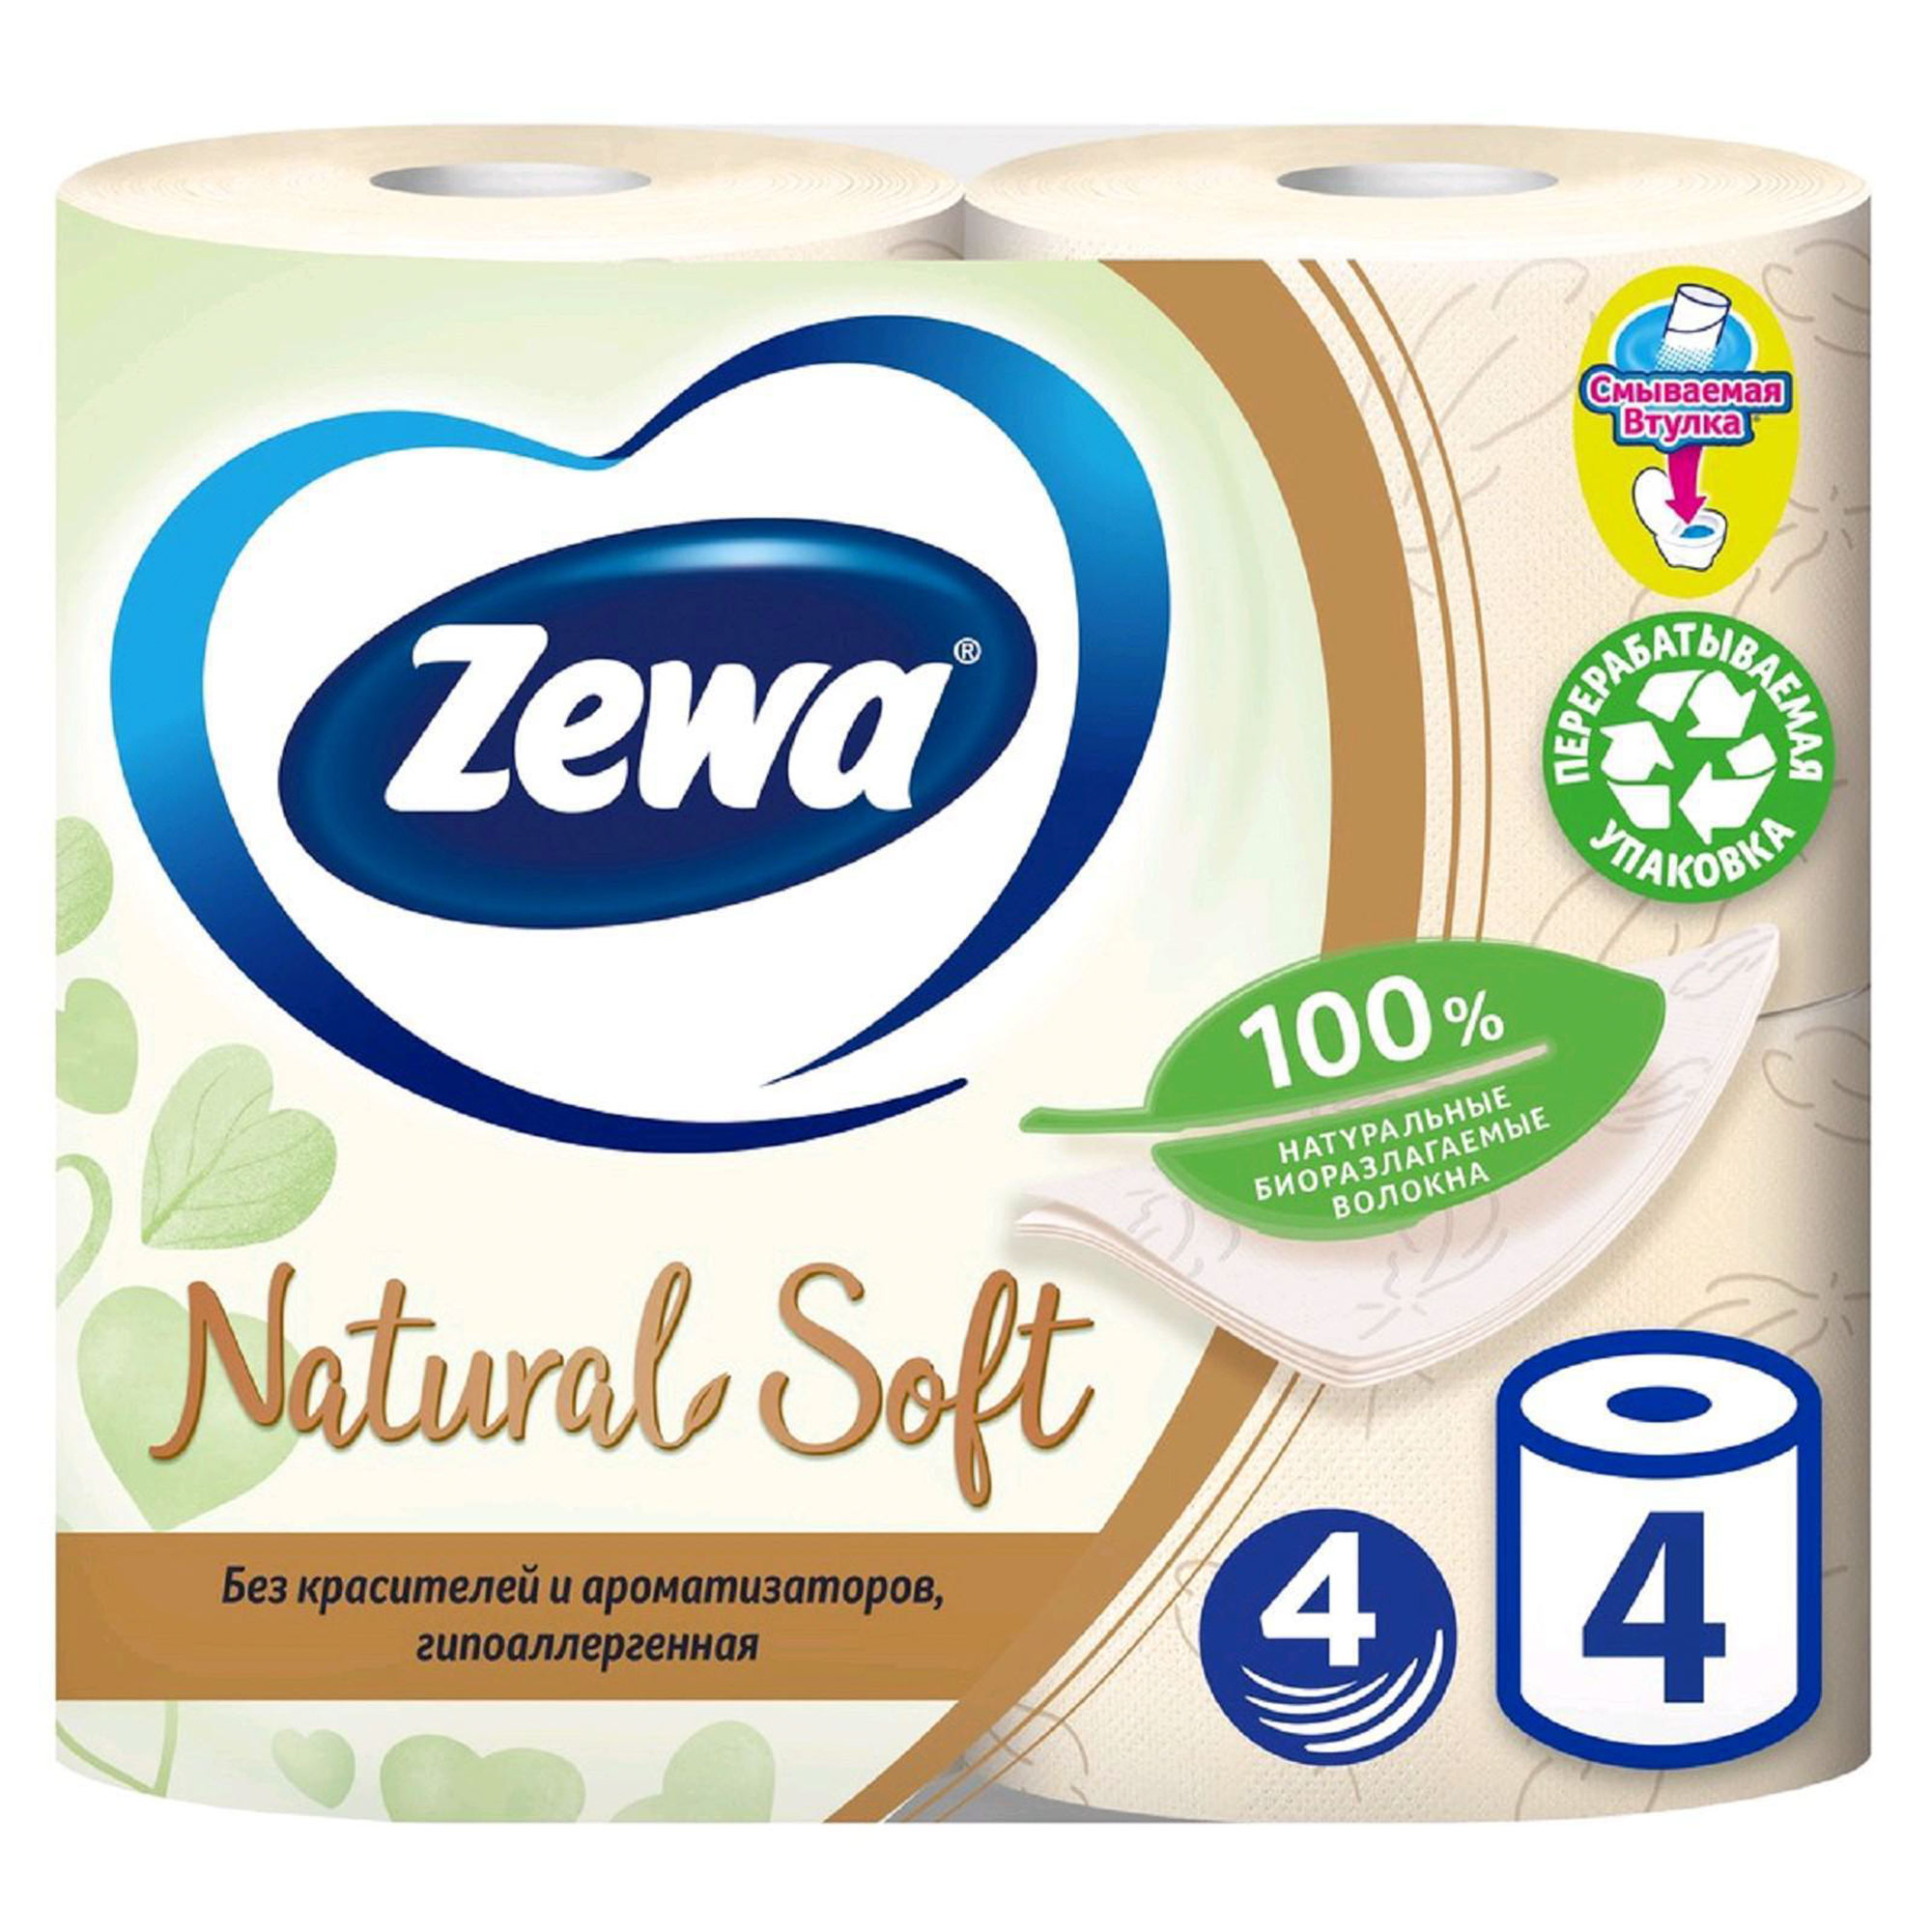 Туалетная бумага Zewa Natural Soft четырехслойная 4 шт туалетная бумага zewa natural soft четырехслойная 4 шт